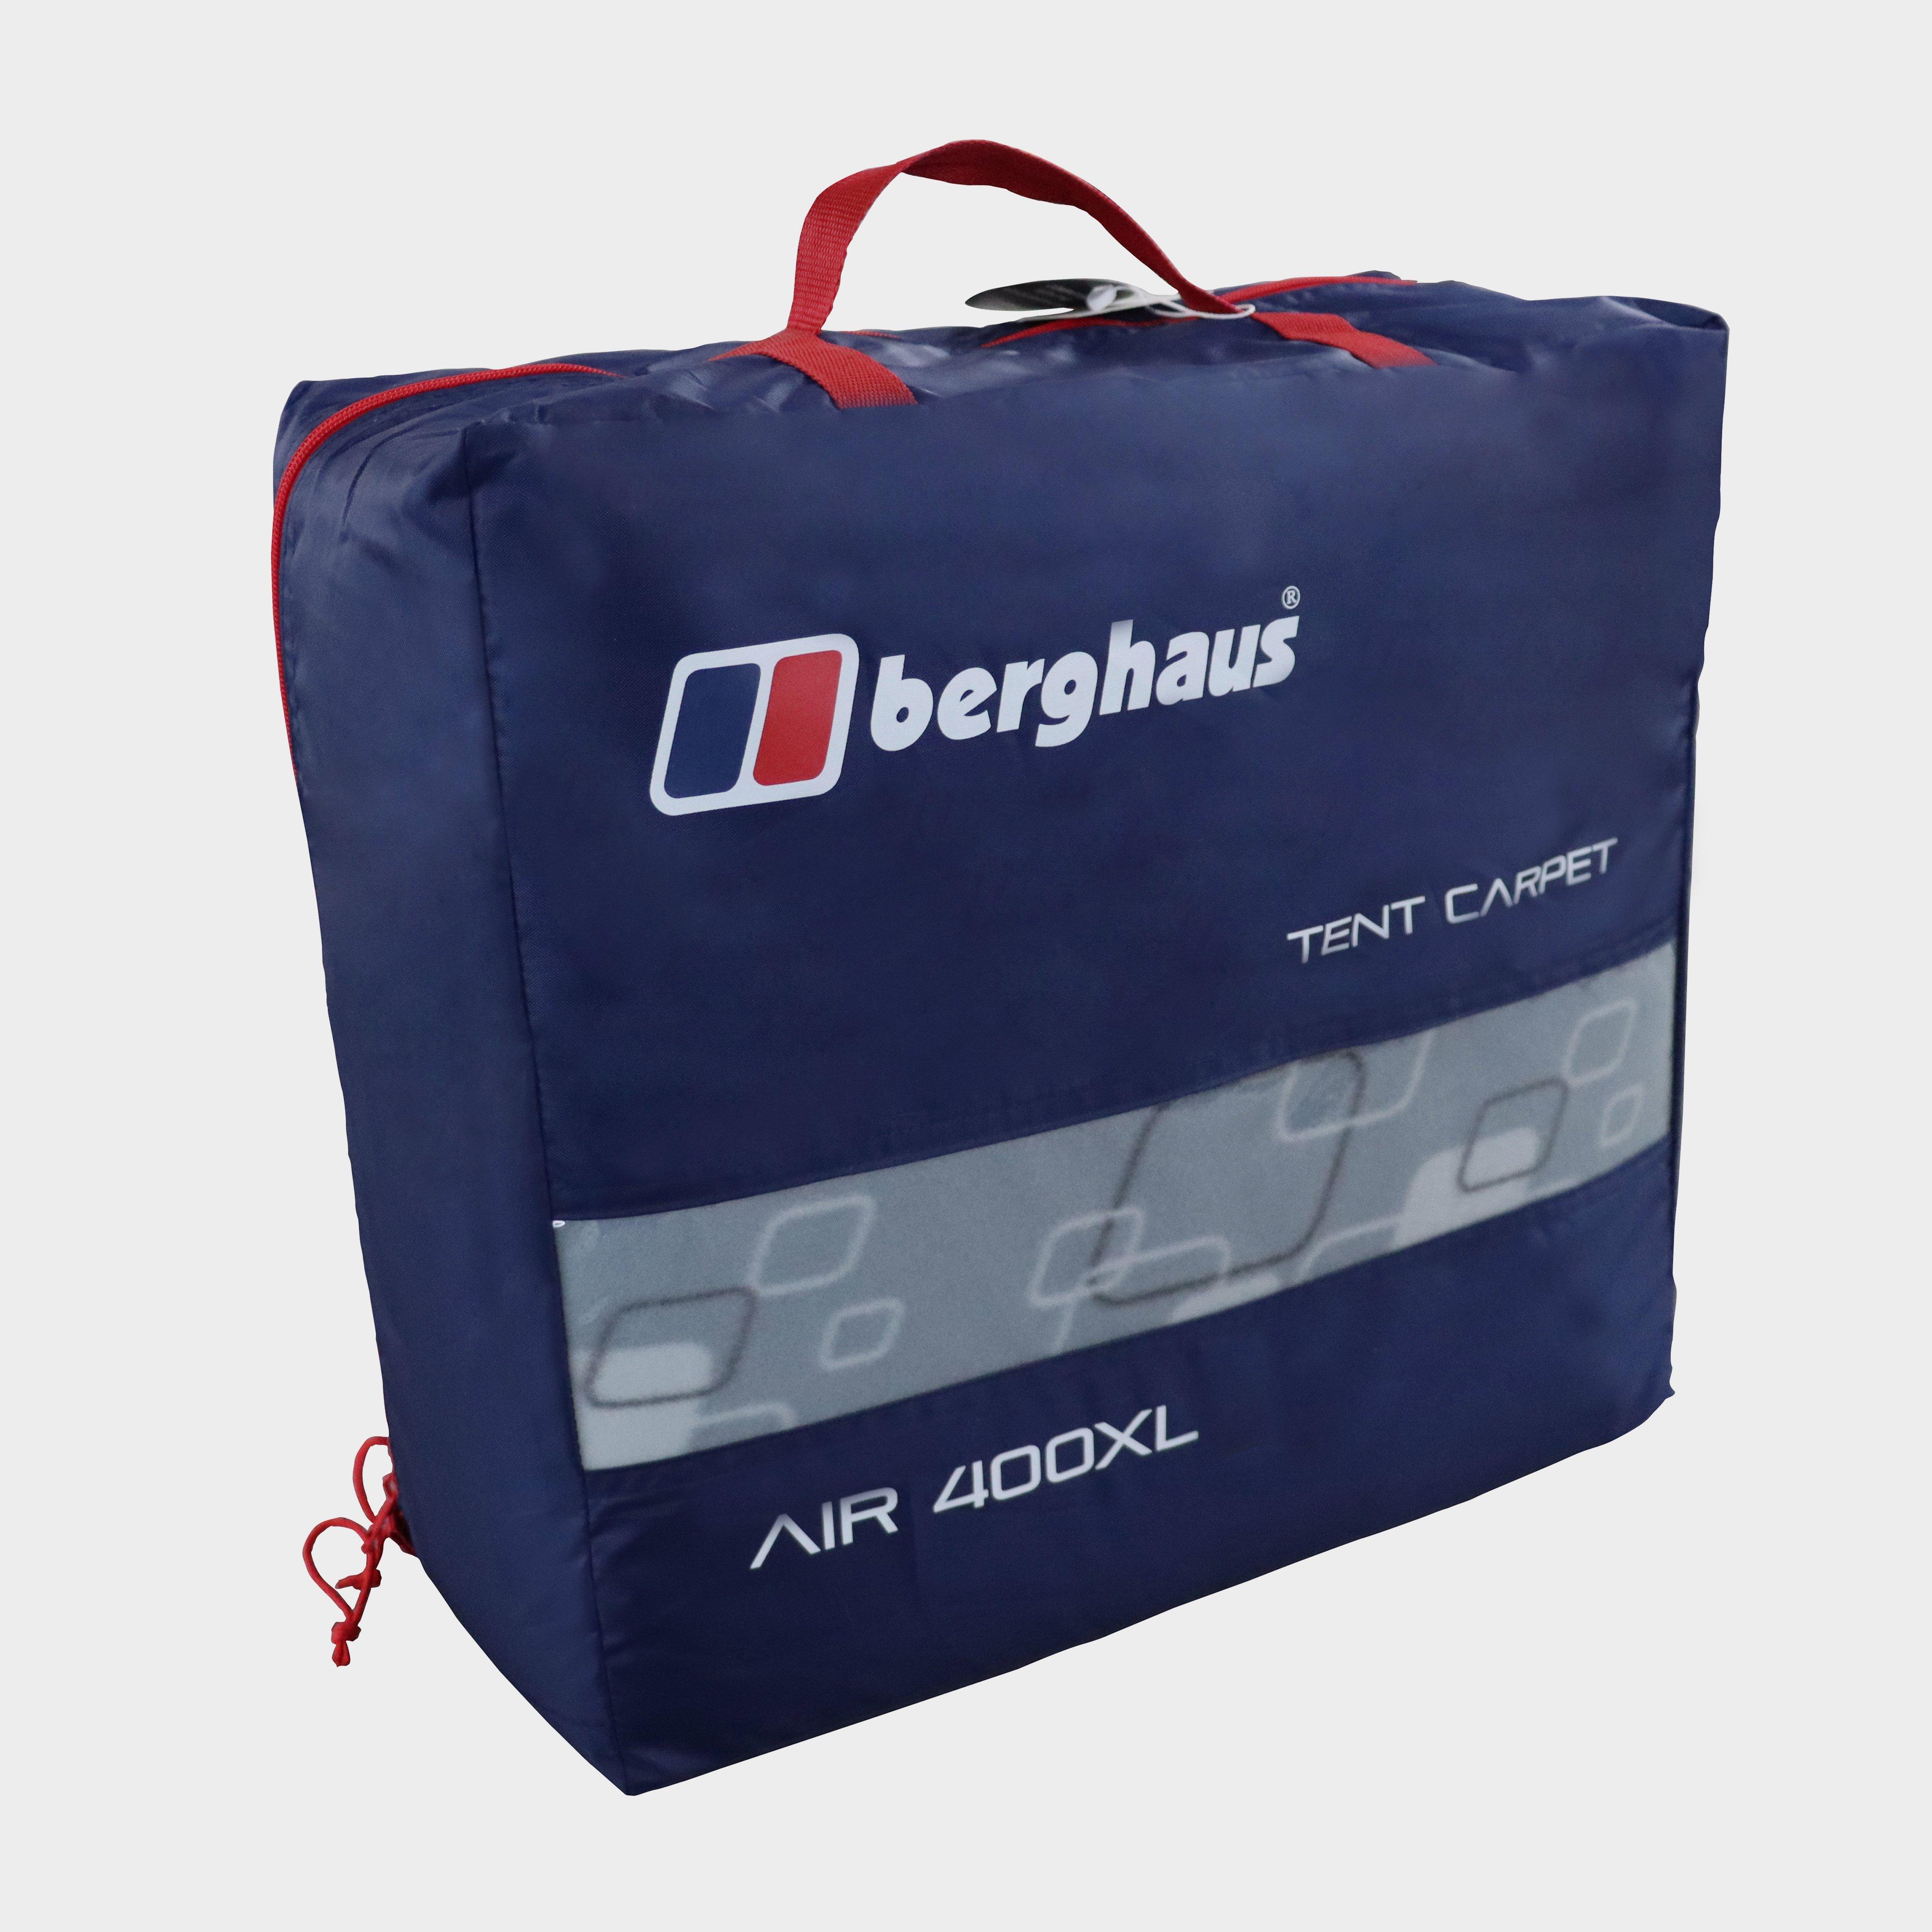 Berghaus Air 400Xl/4.1Xl/4Xl Tent Carpet - Dark Grey, Dark Grey